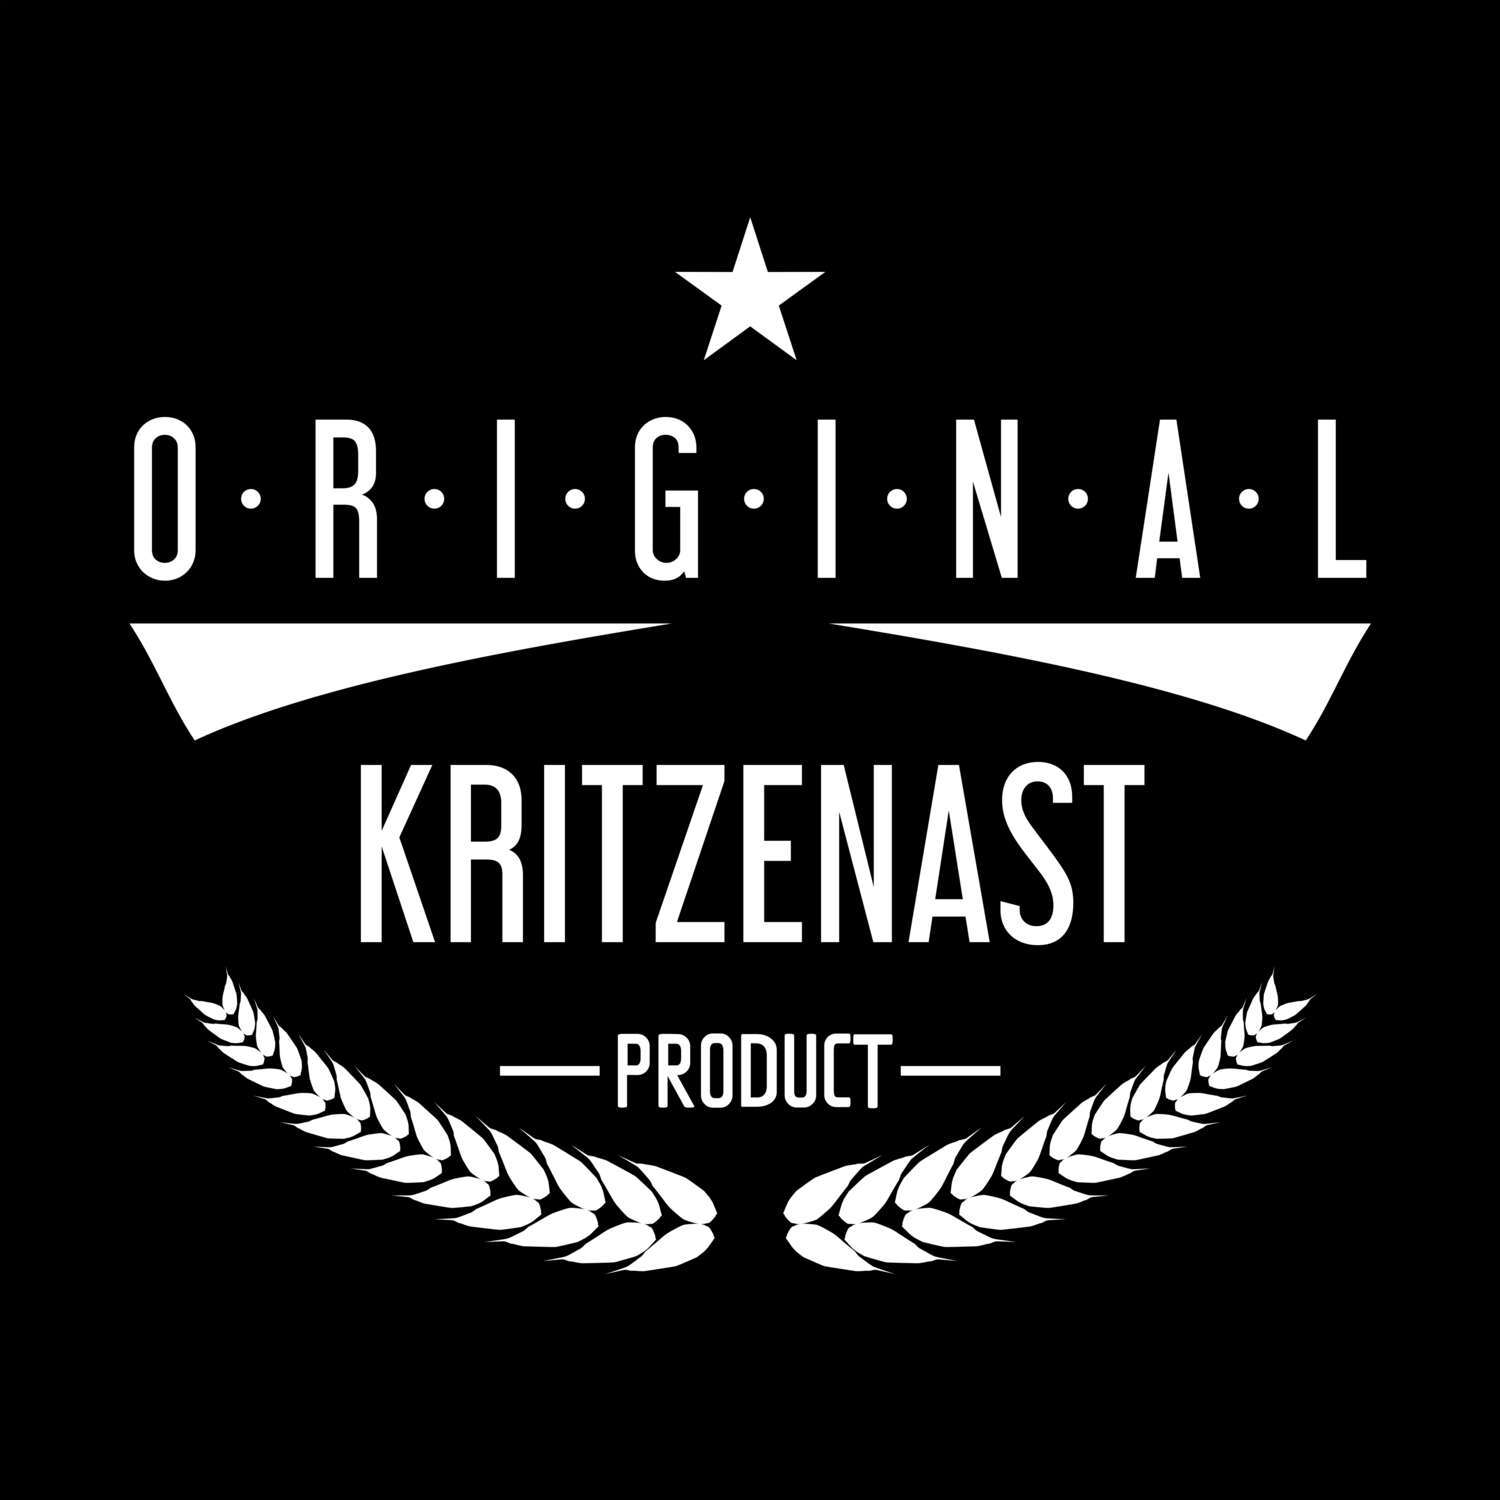 Kritzenast T-Shirt »Original Product«